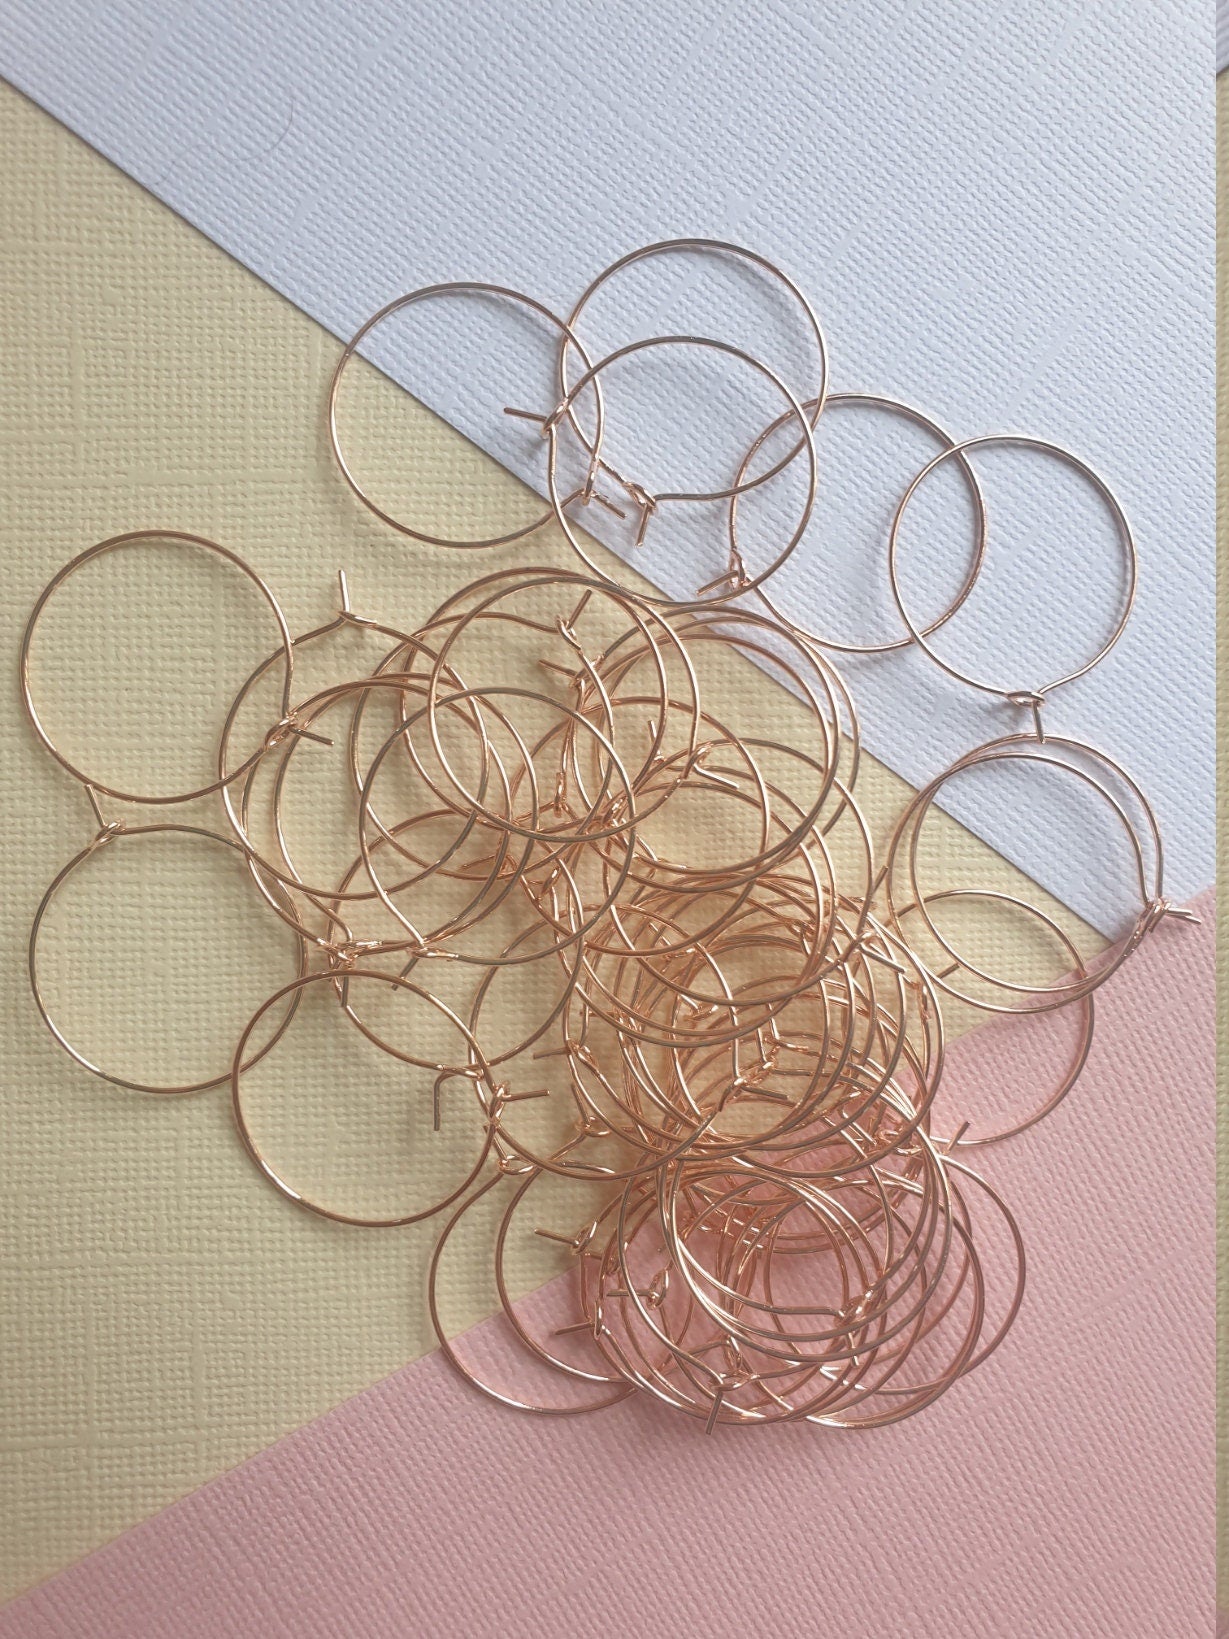 50pcs 20/25mm silver/rose/gold/black/bronze Hoops Earrings Big Circle Ear Wire Hoops Earrings Wires For DIY Jewellery Making Supplies